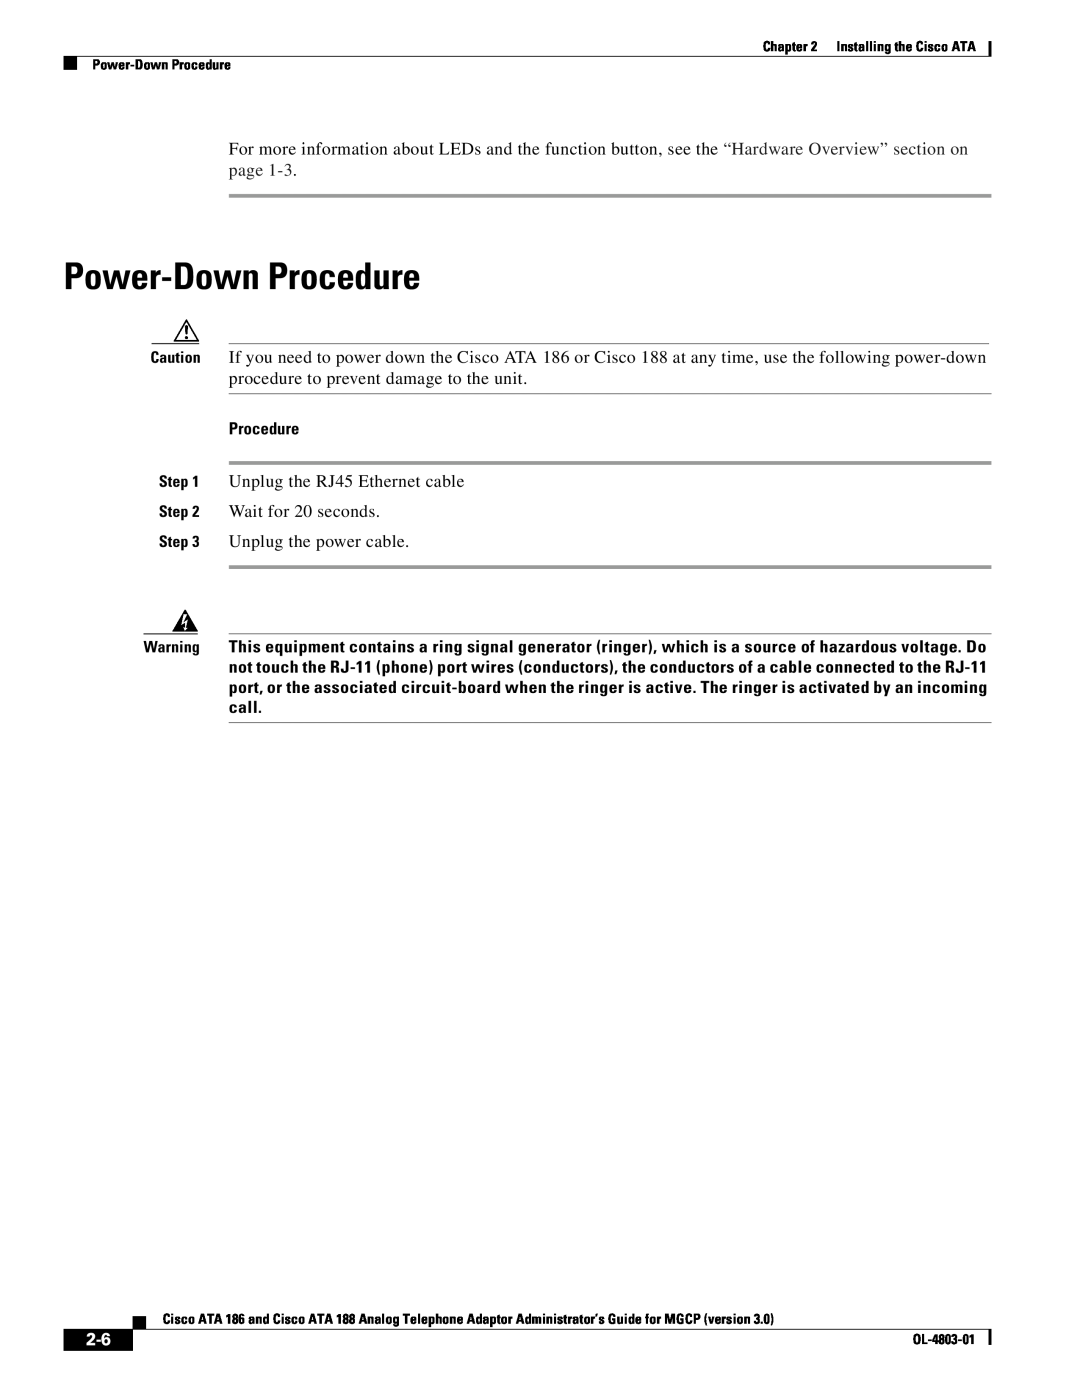 Cisco Systems ATA 186 manual Power-Down Procedure 